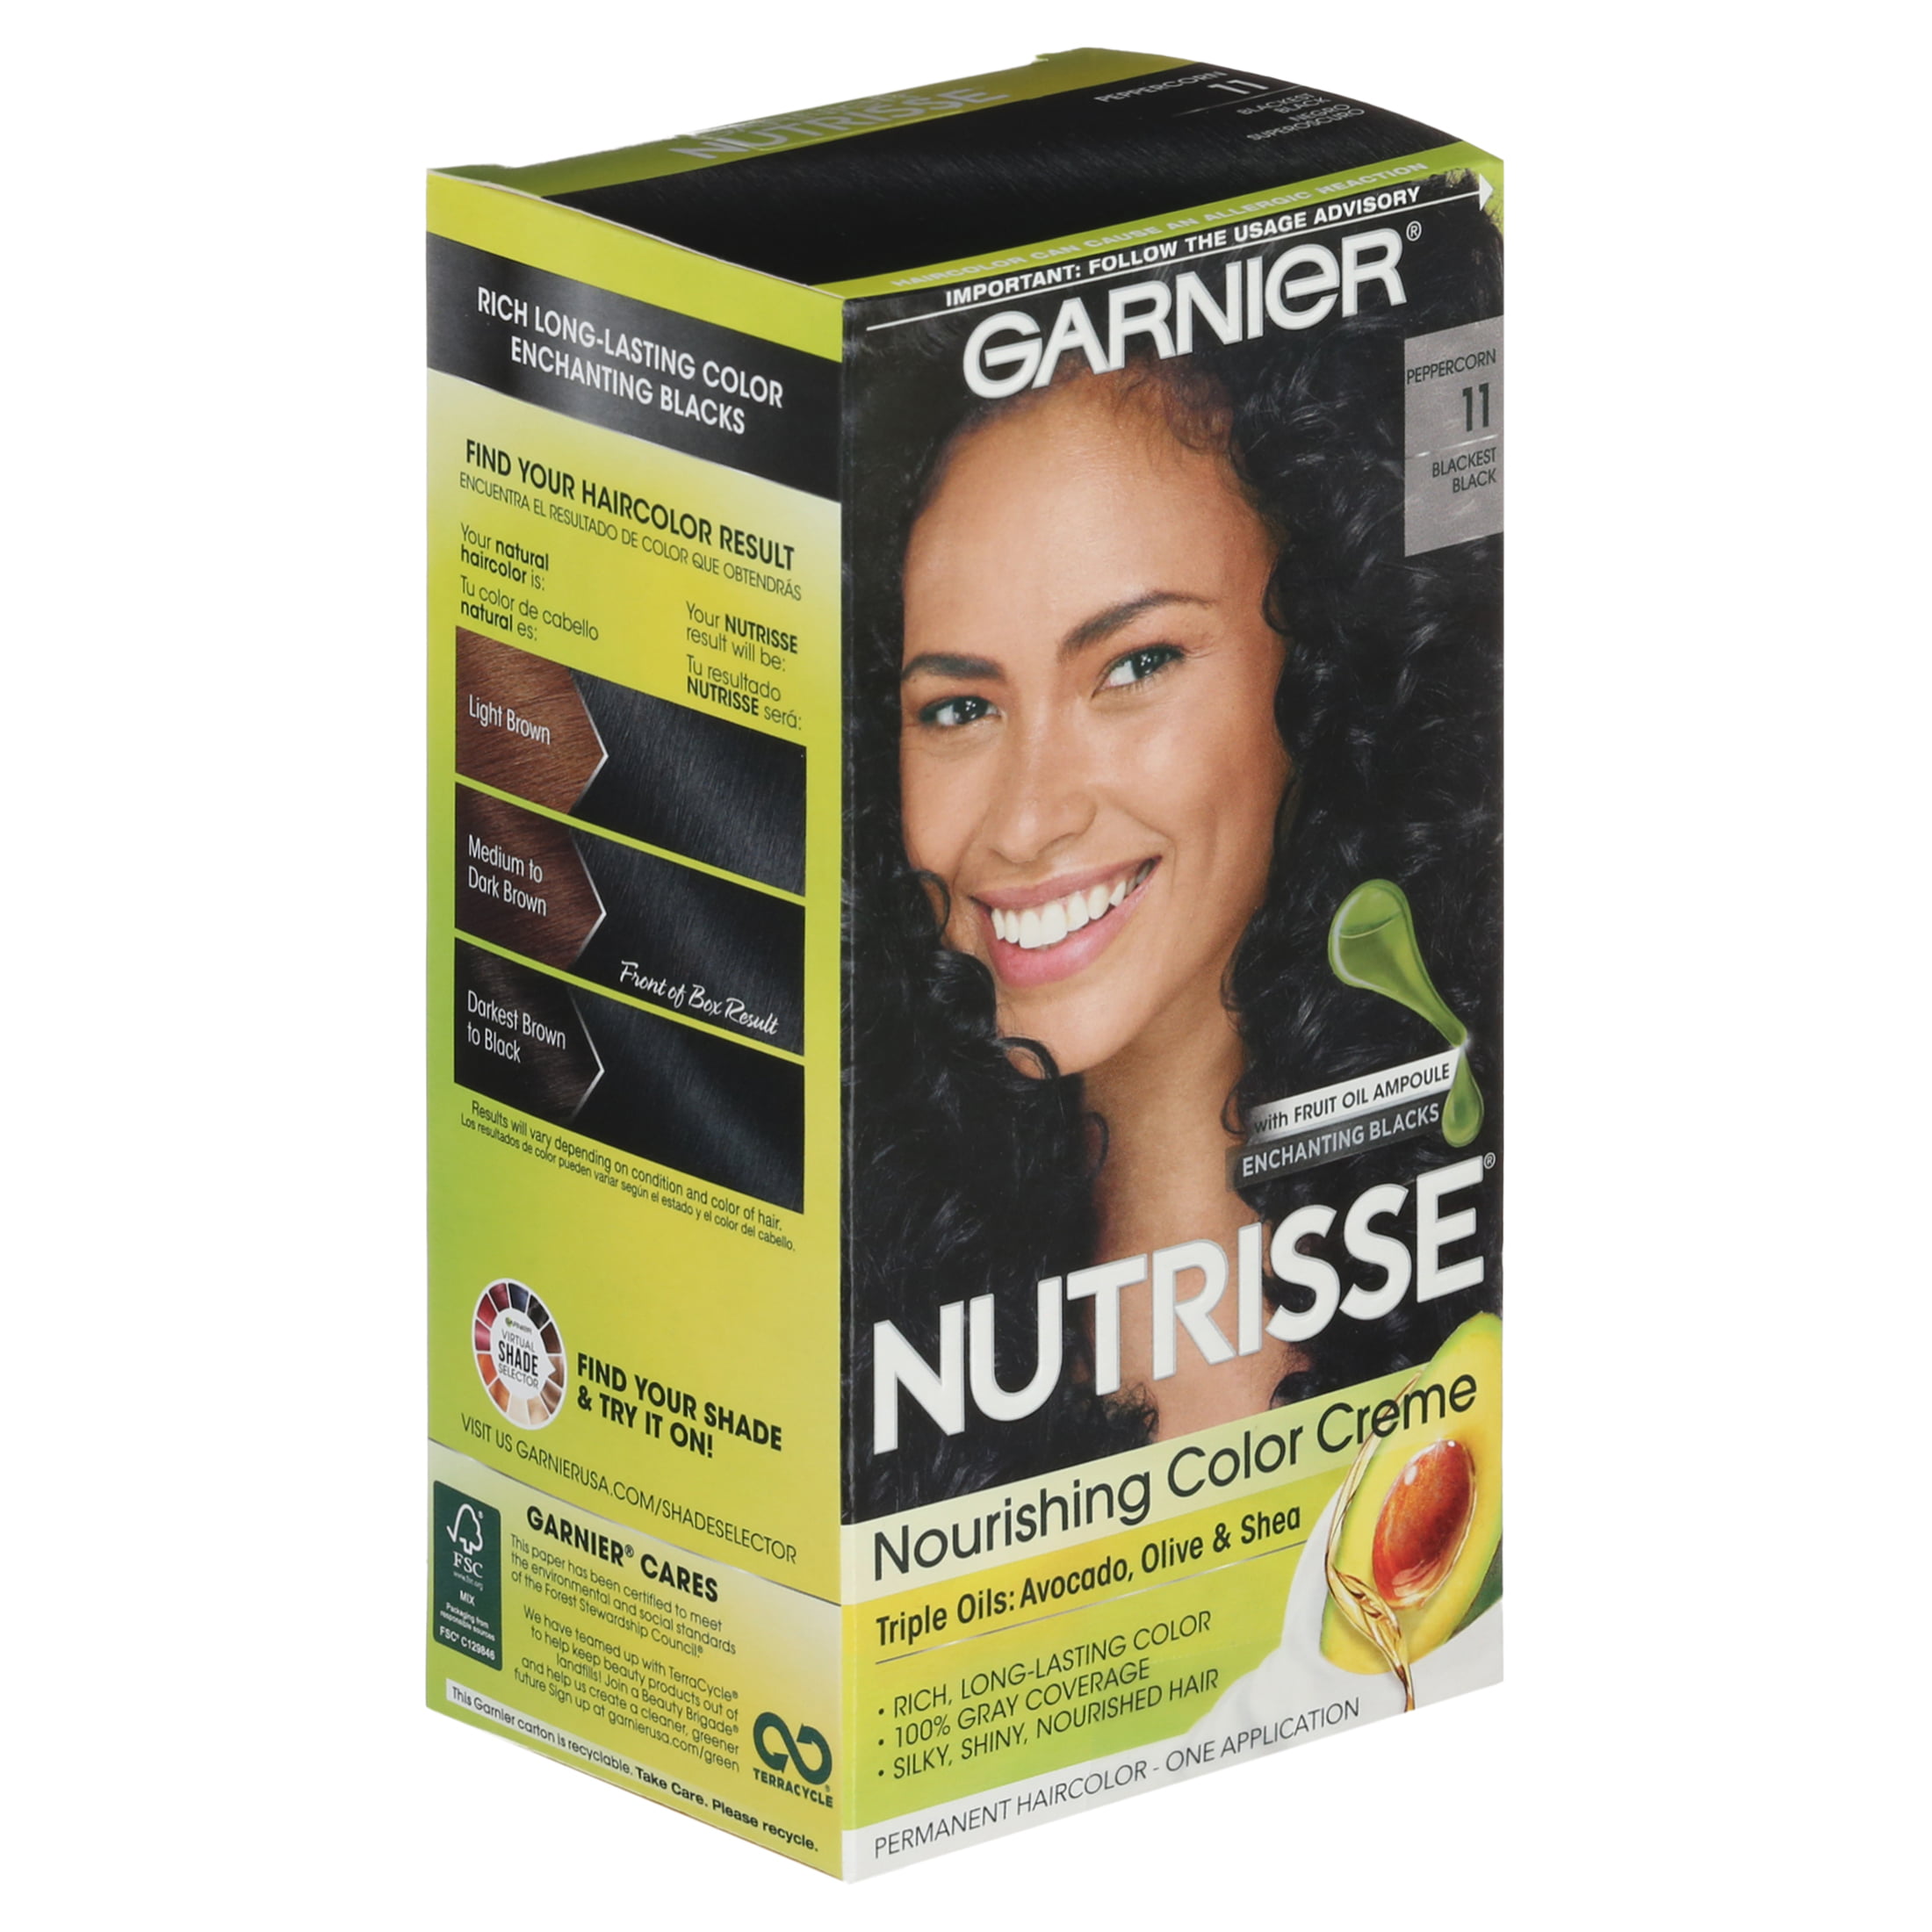 Garnier Nutrisse Nourishing Hair Color Creme, 11 Blackest Black, 1 Kit -  